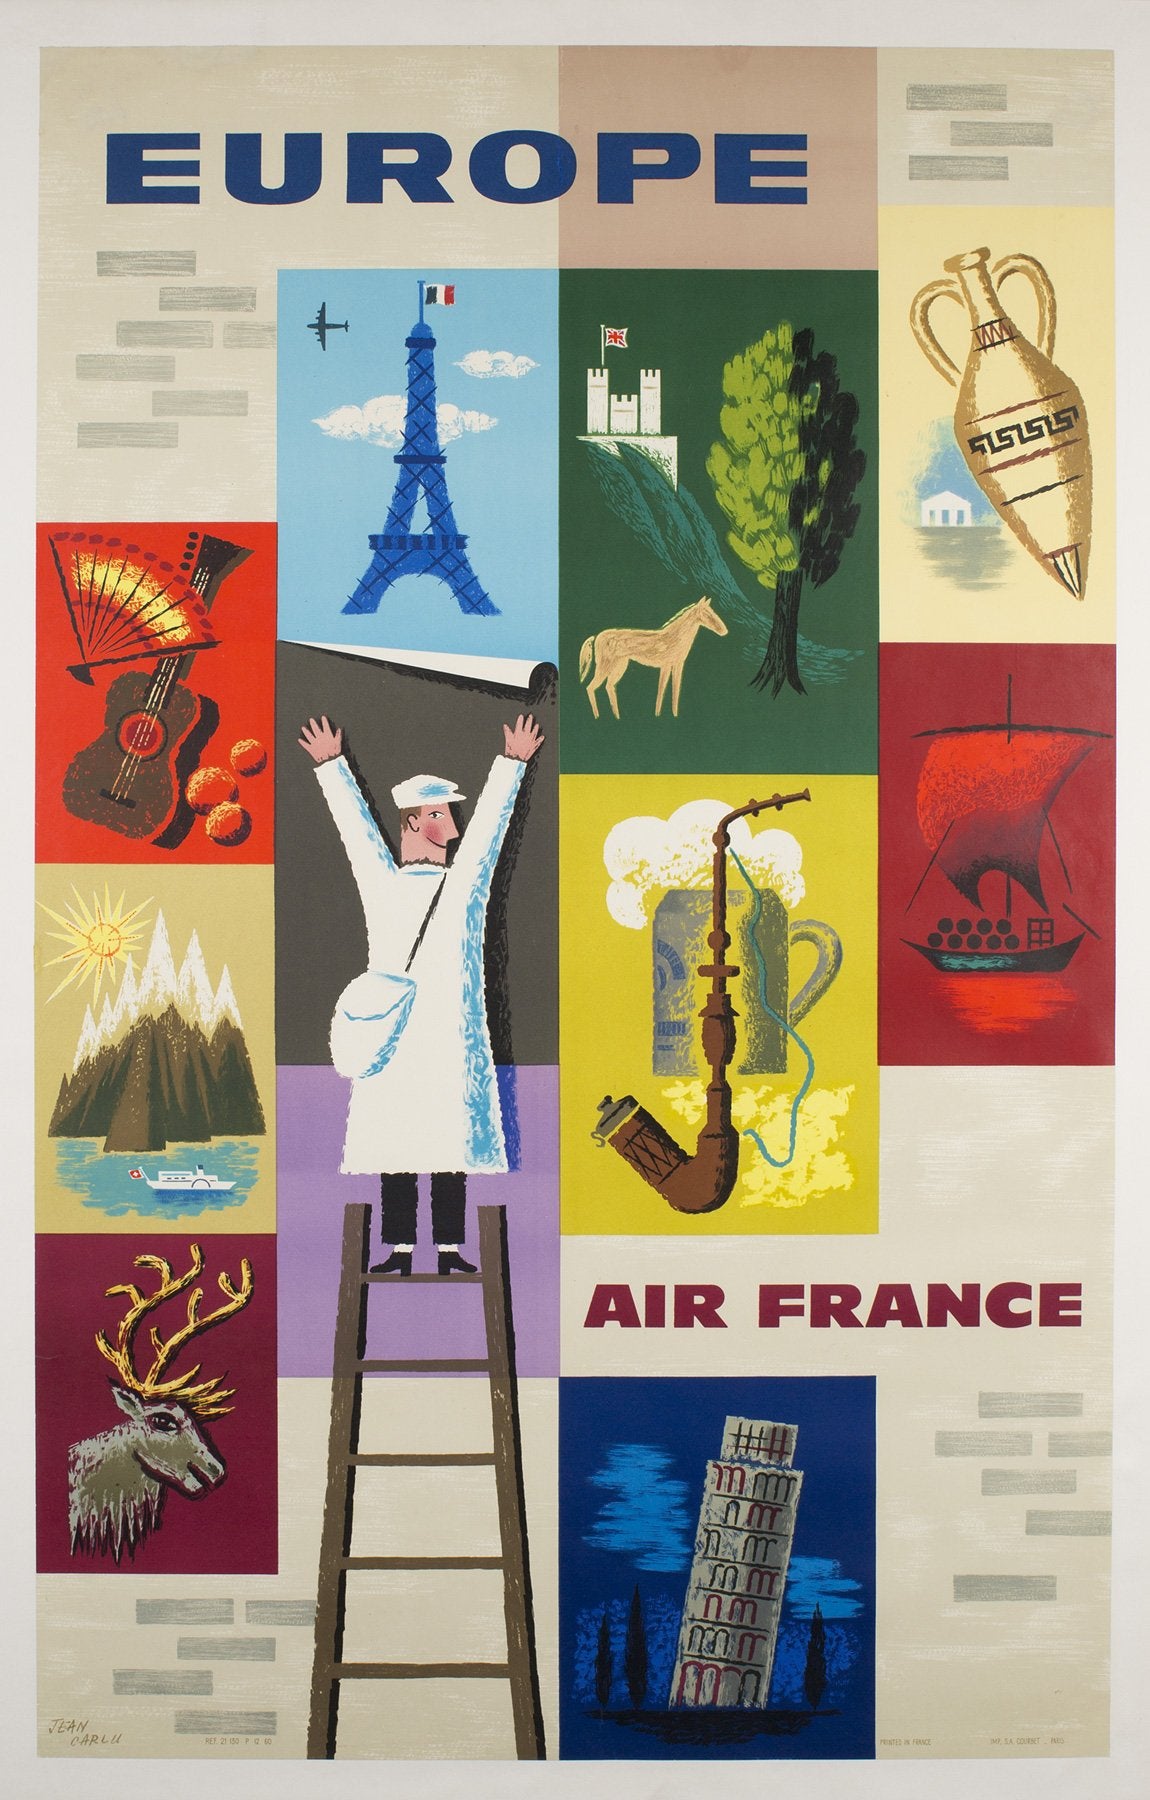 Air France Europe 1959 Poster by Jean Carlu